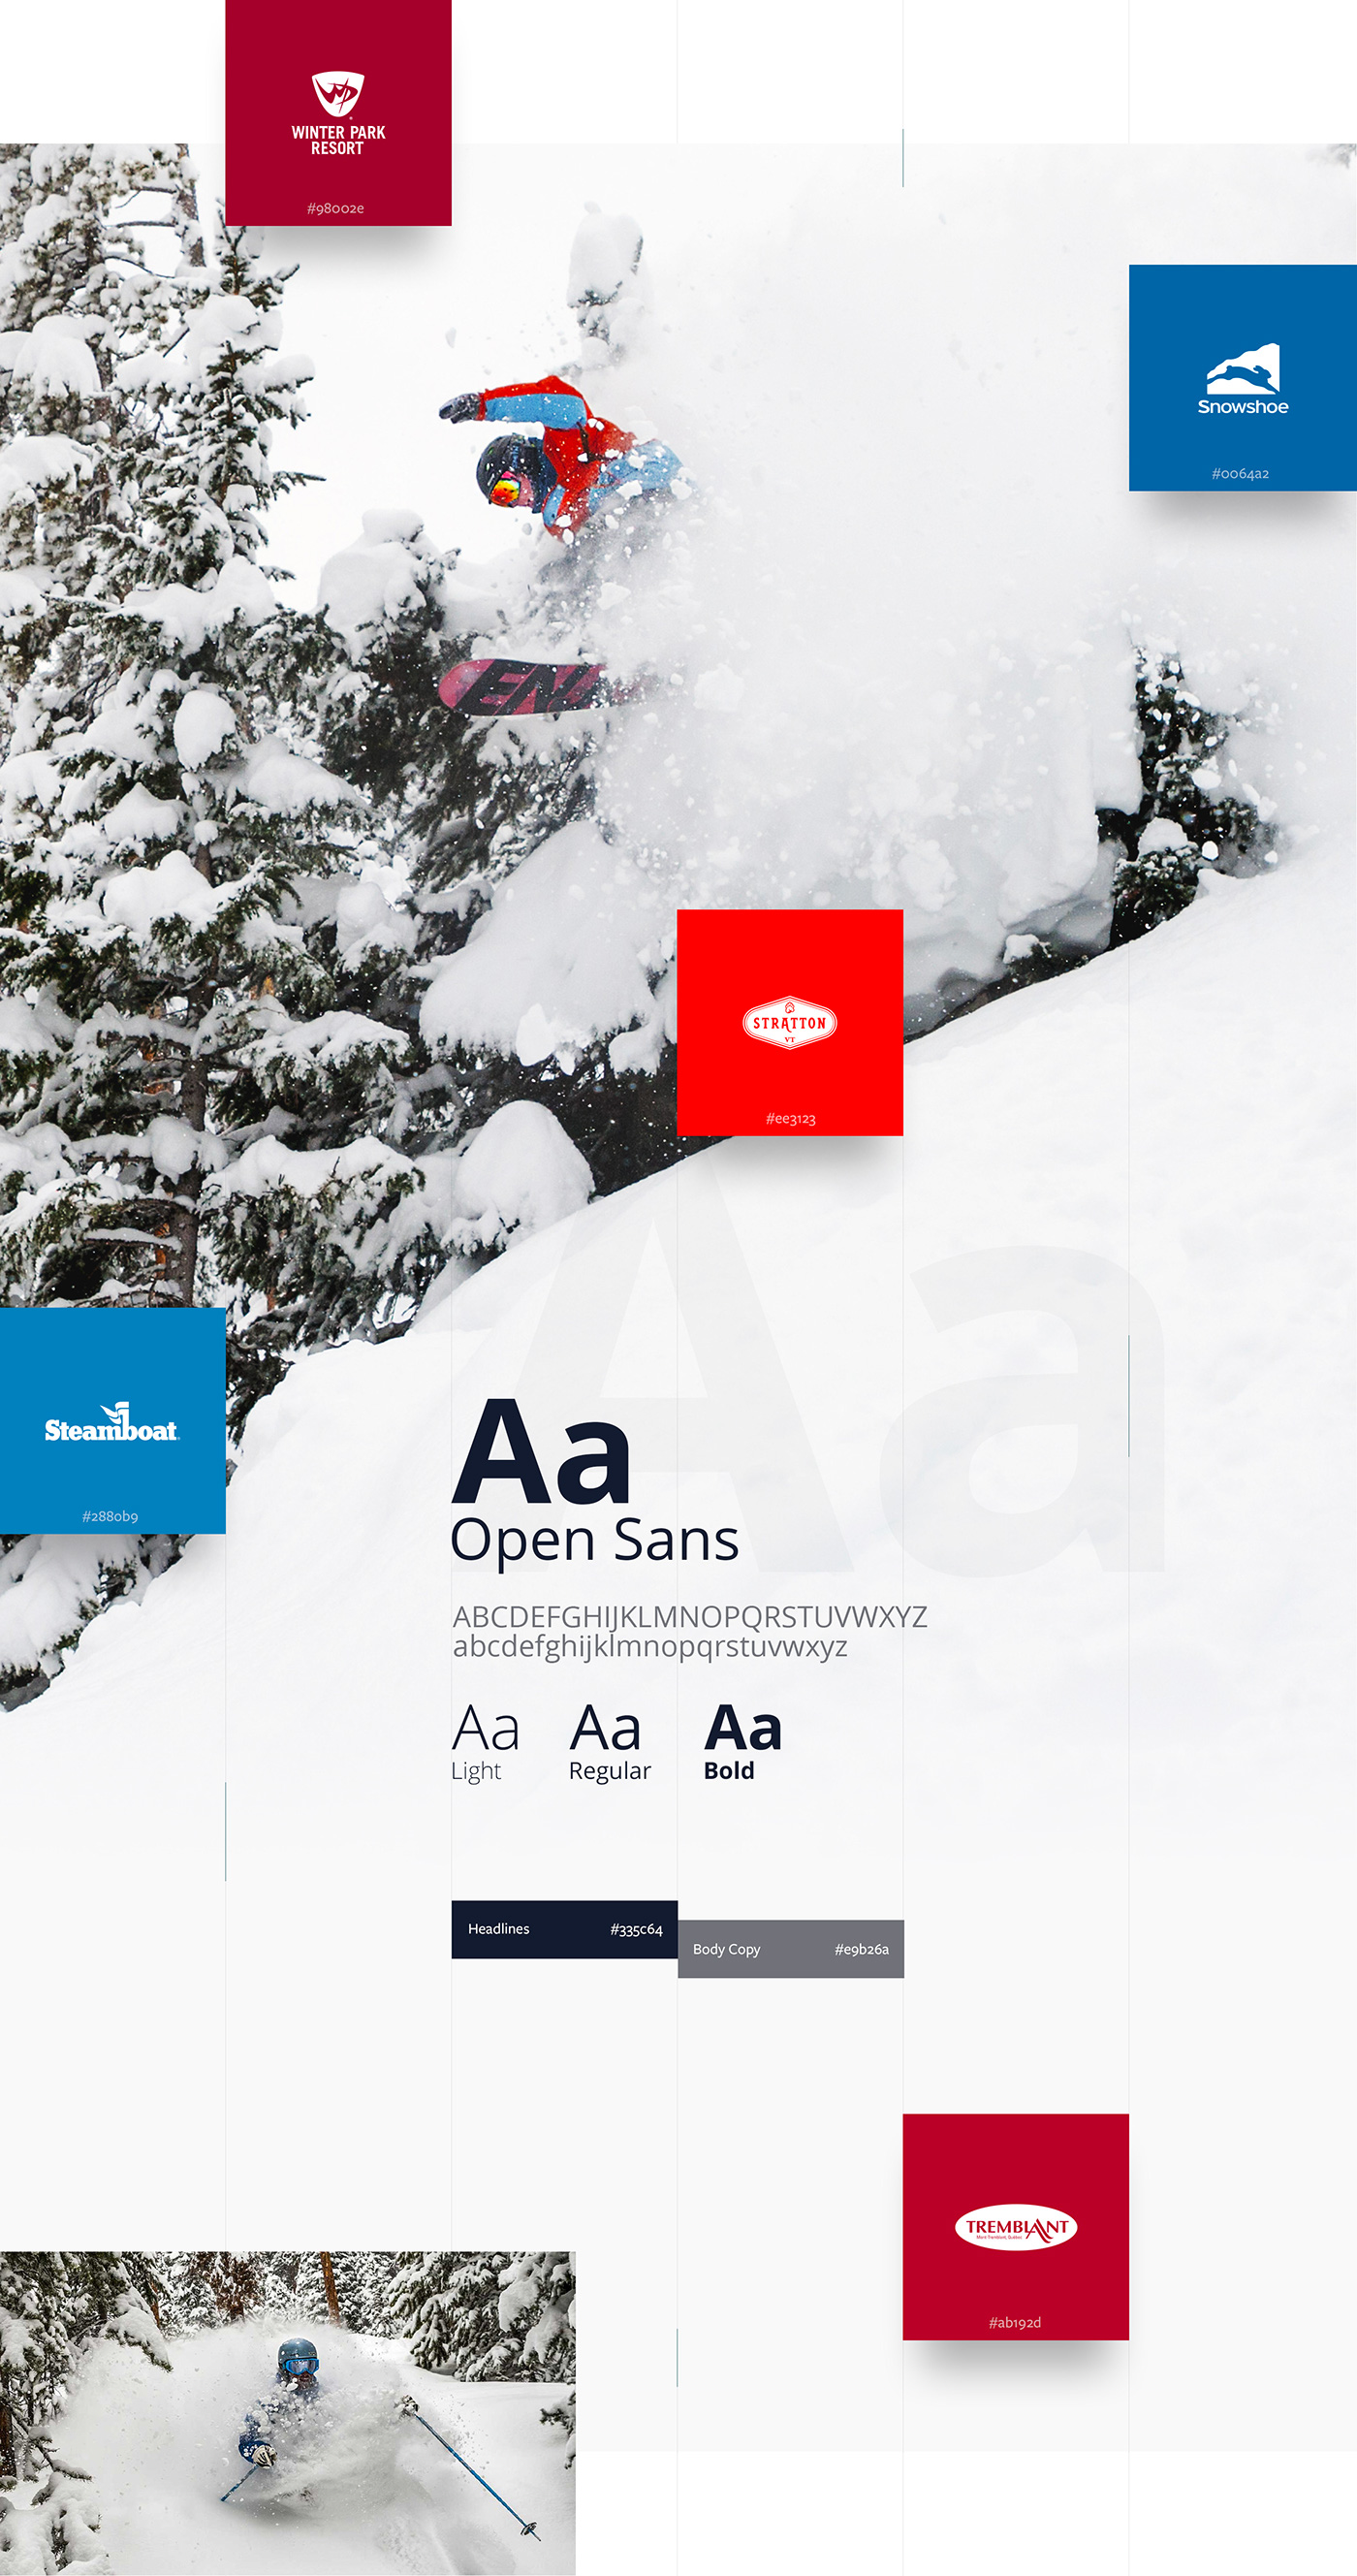 user interface user experience mobile design Ski Resort winter